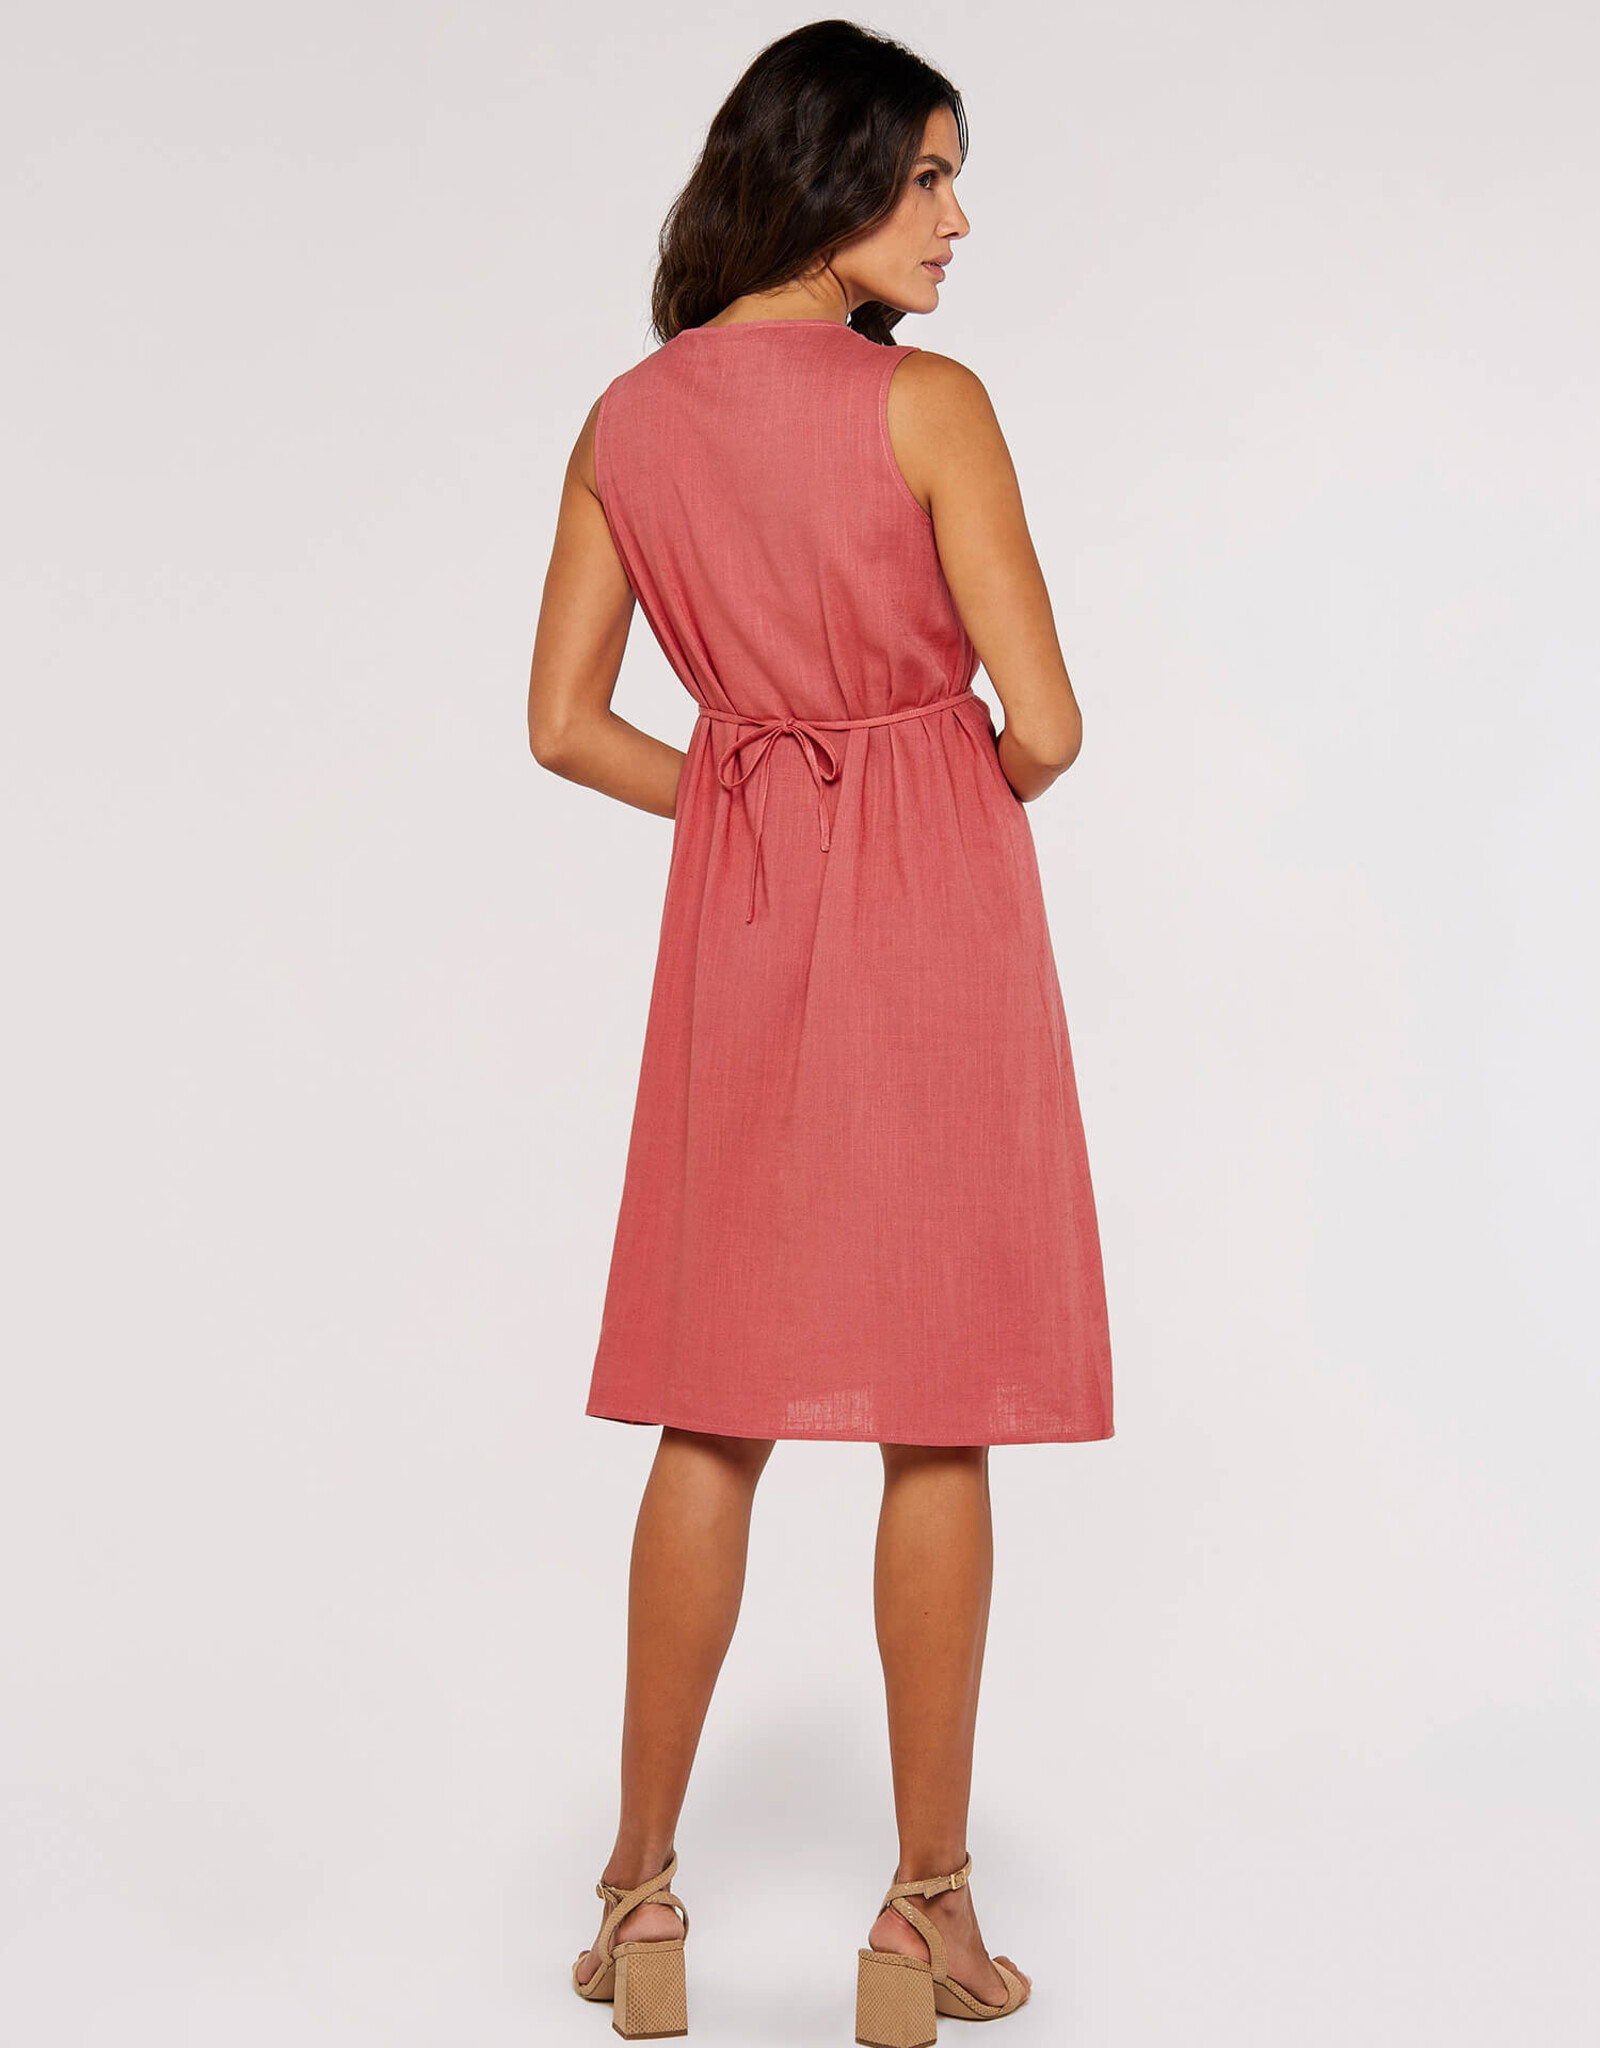 Apricot Cross Over Pleat Detail Linen Mix Dress